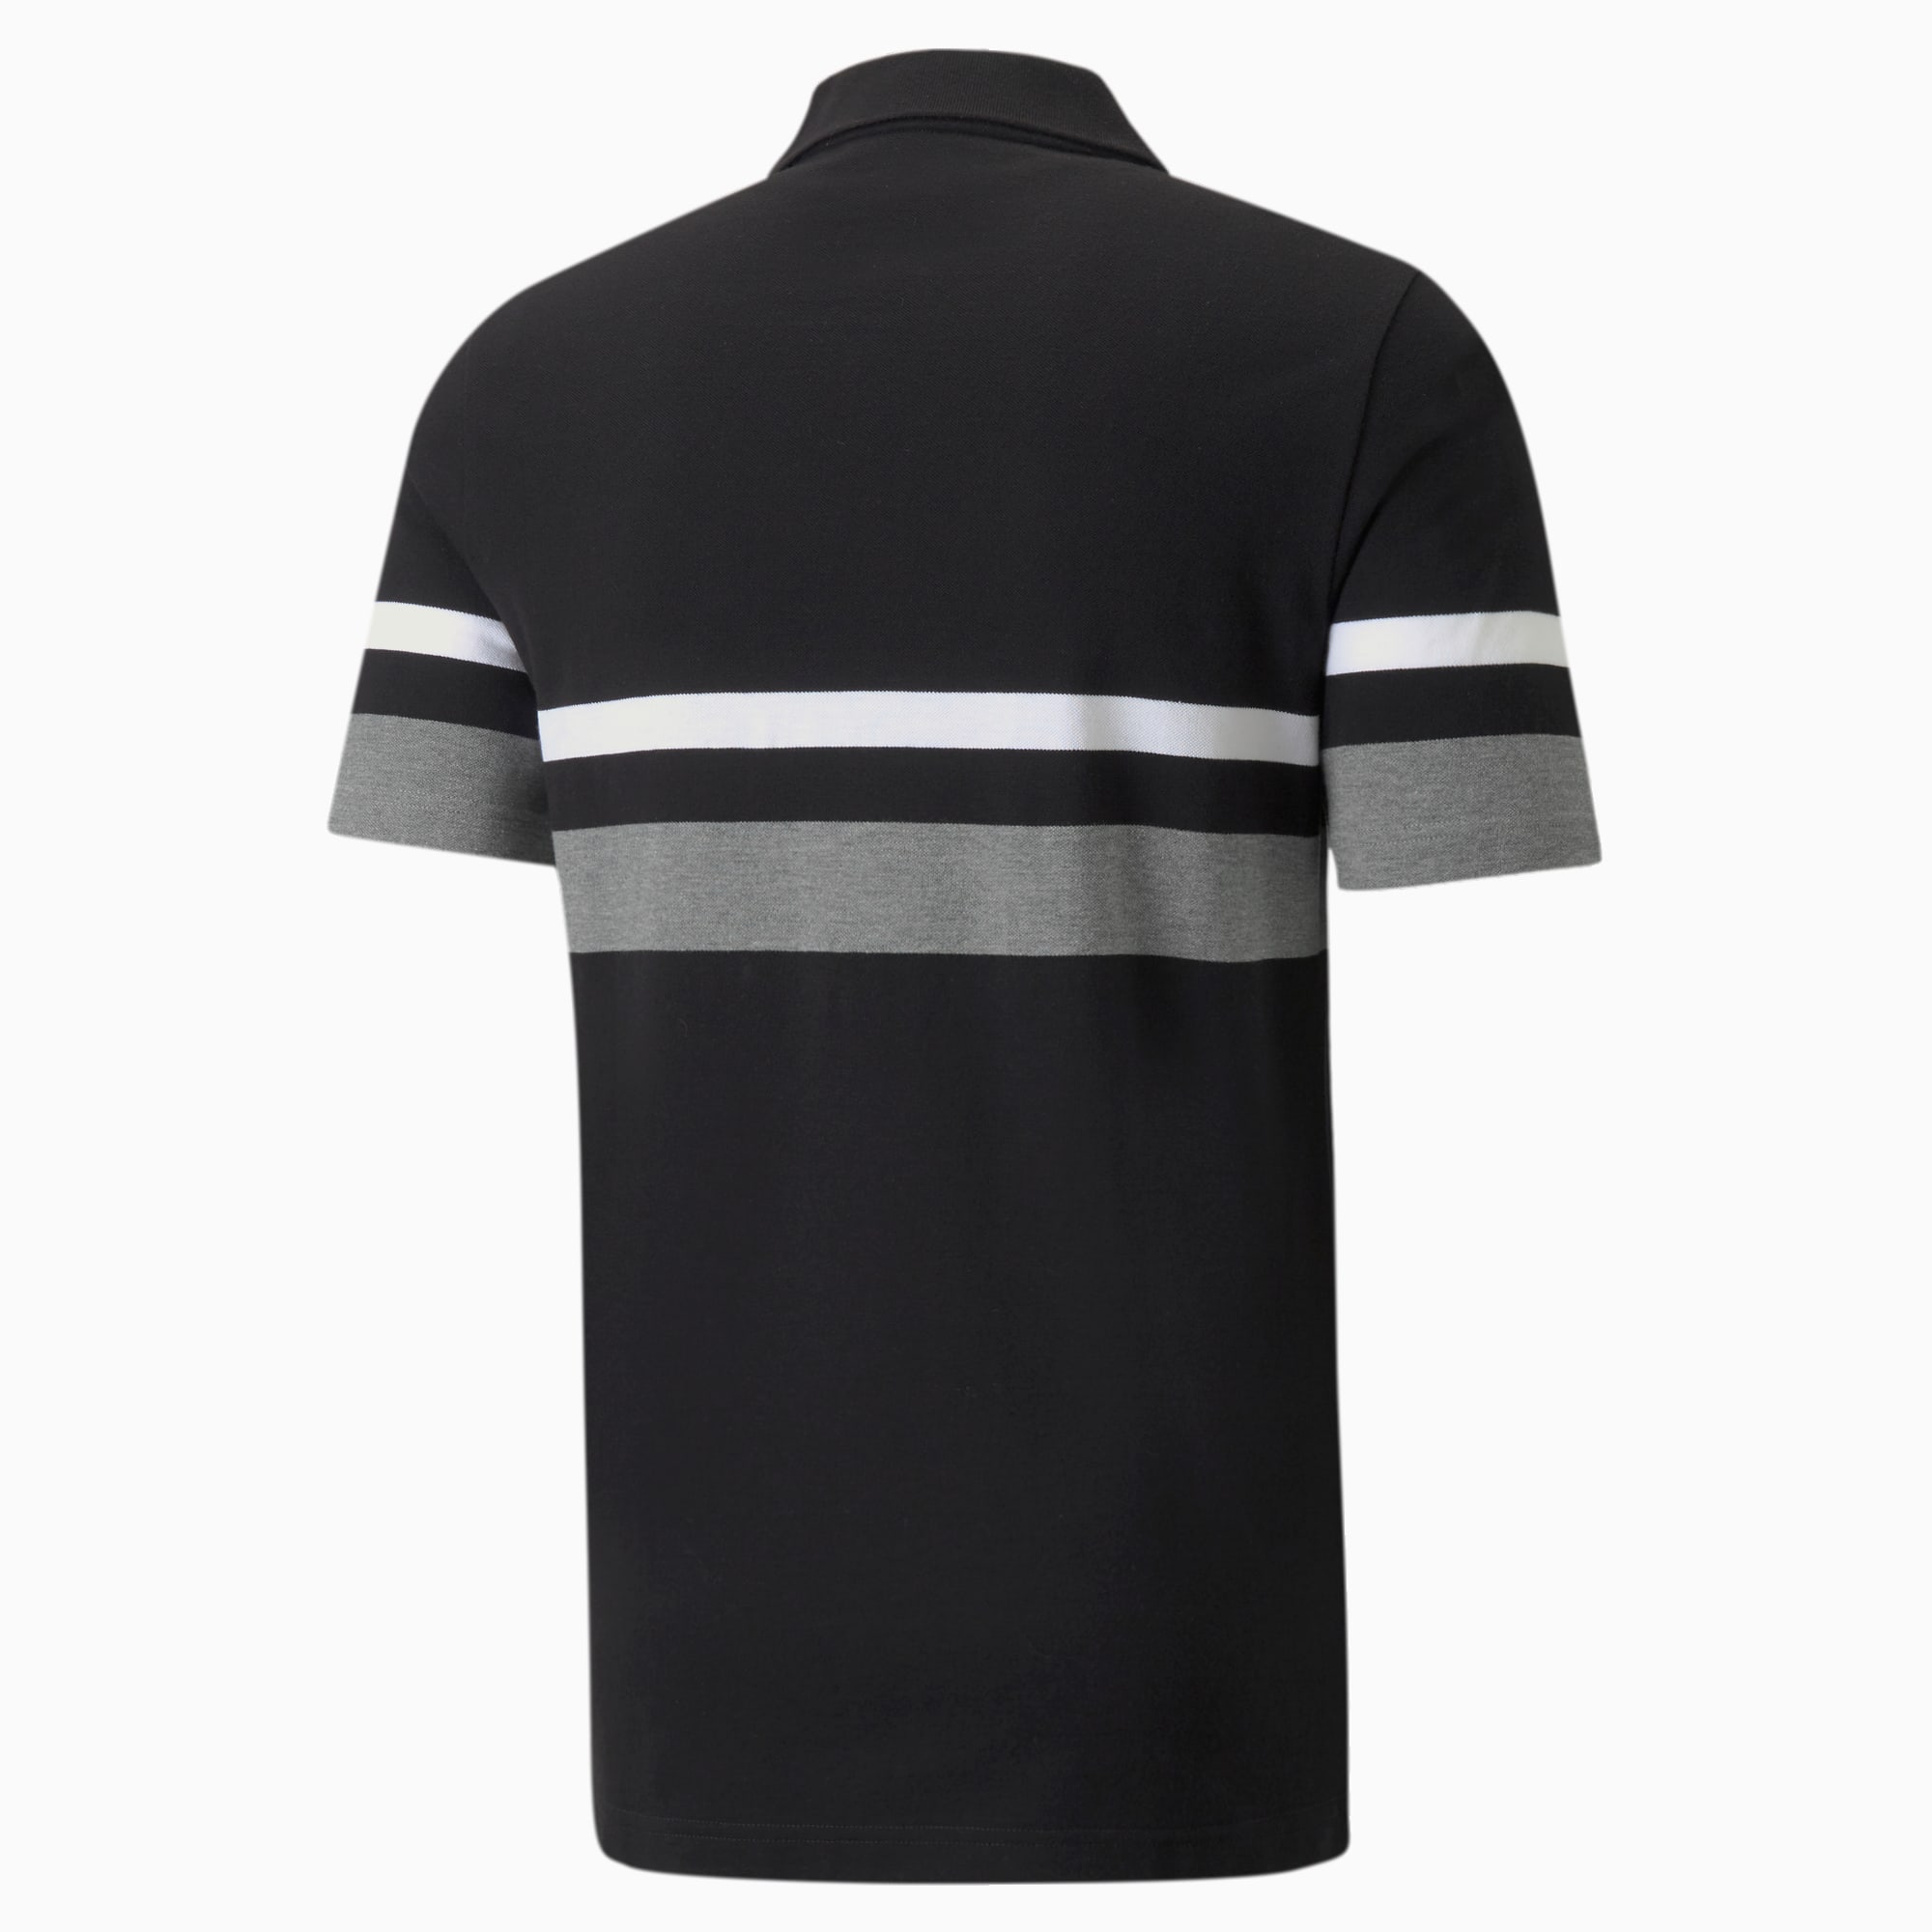 PUMA Essentials Stripe Men's Polo Shirt, Black, Size XXS, Clothing